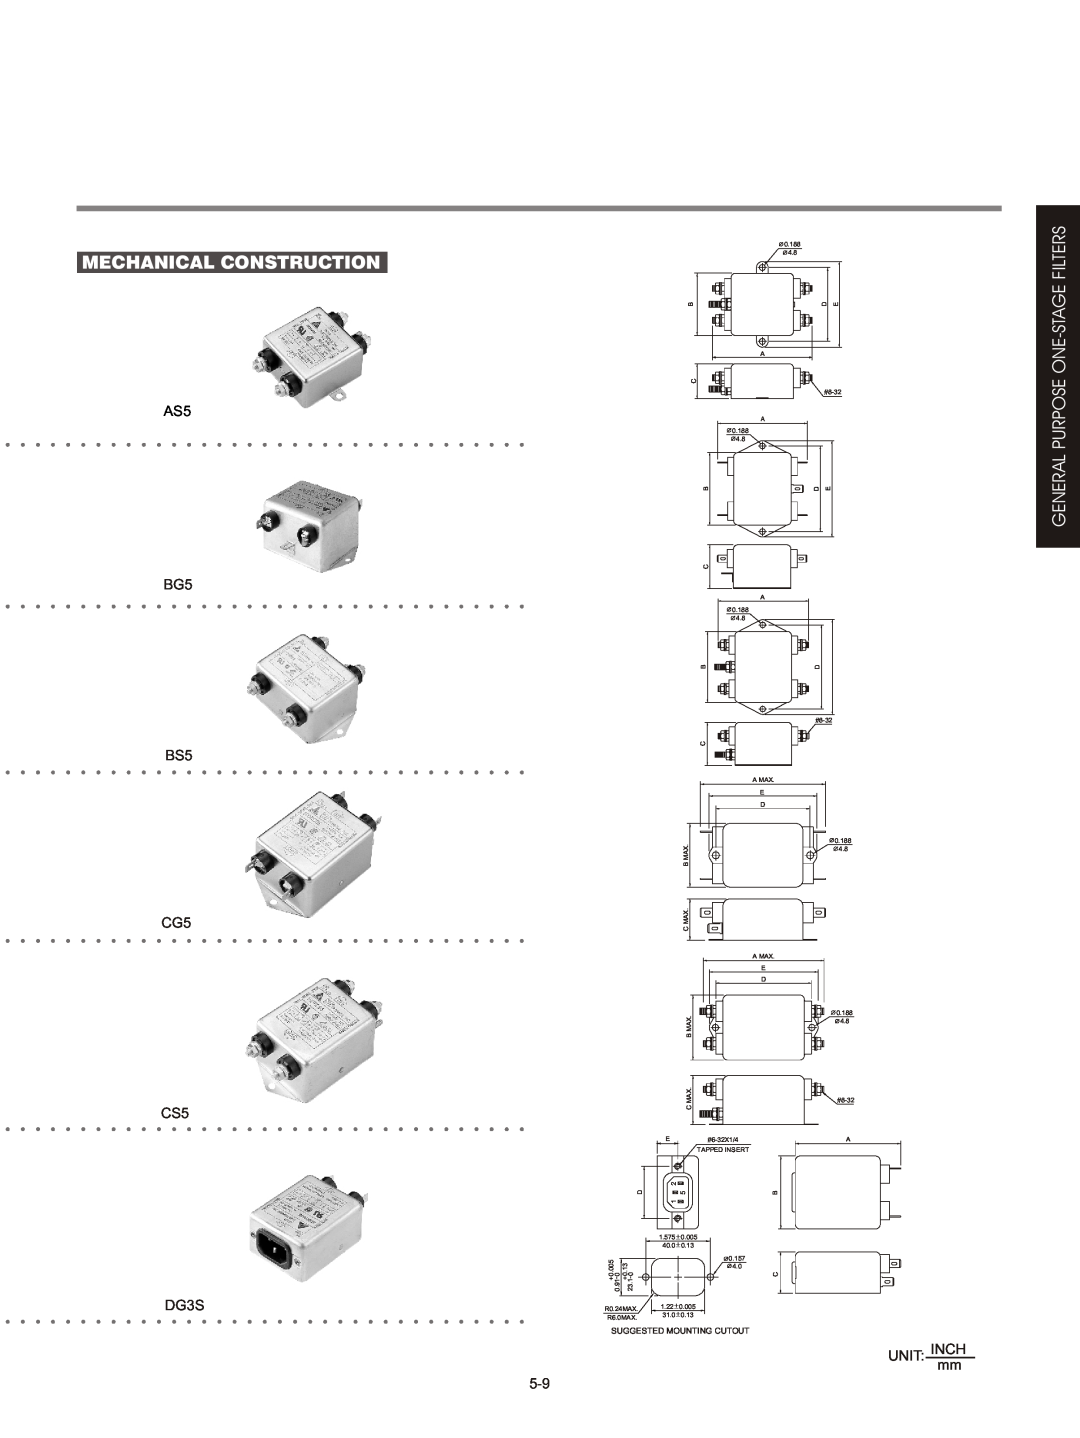 Delta Electronics KPE-LE01 Mechanical Construction, General Purpose One-Stage Filters, BS5 CG5, CS5 DG3S, UNIT INCH mm 